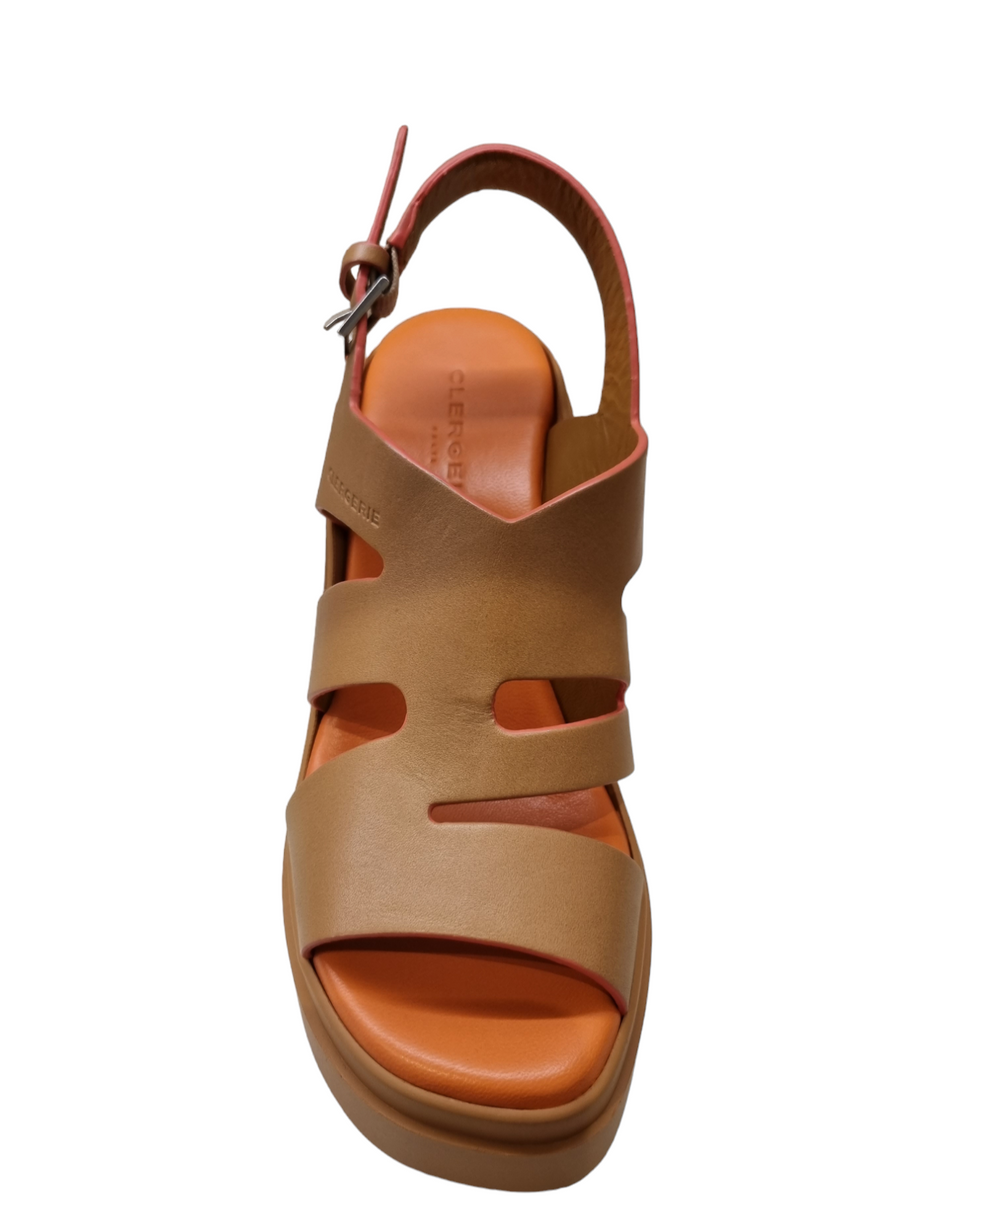 Nateo Tan Leather Platform - Clergerie - Liberty Shoes Australia